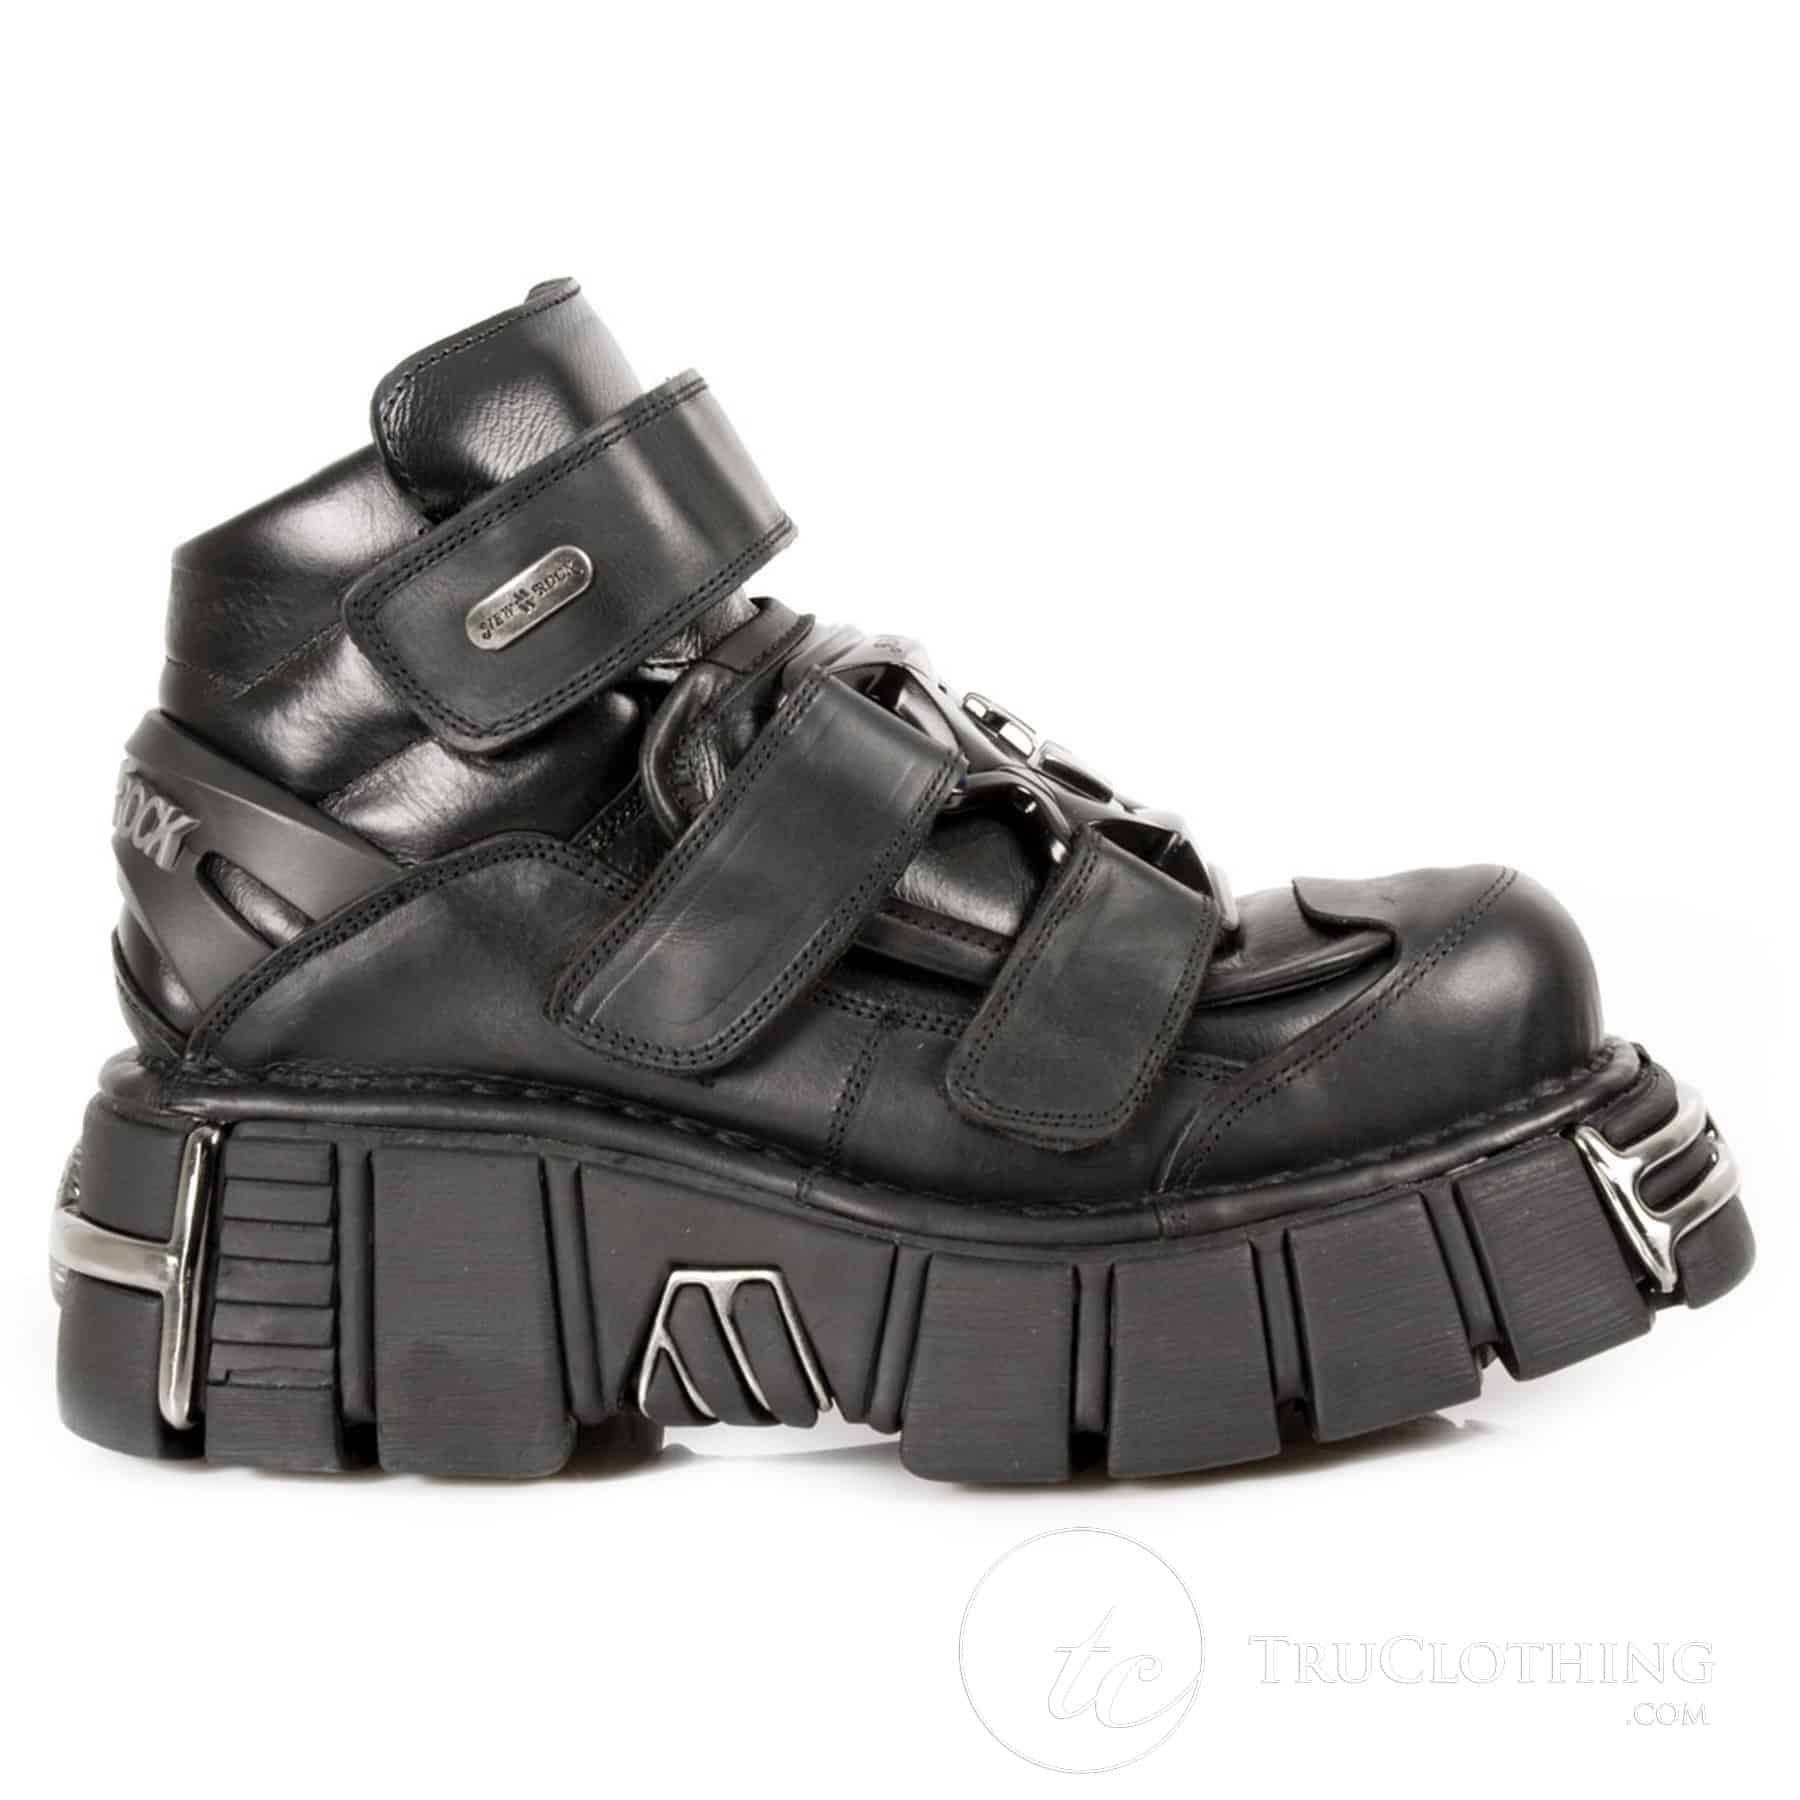 M.285-S1 New Rock Unisex Shoes Metallic Leather Biker Gothic Velcro ...